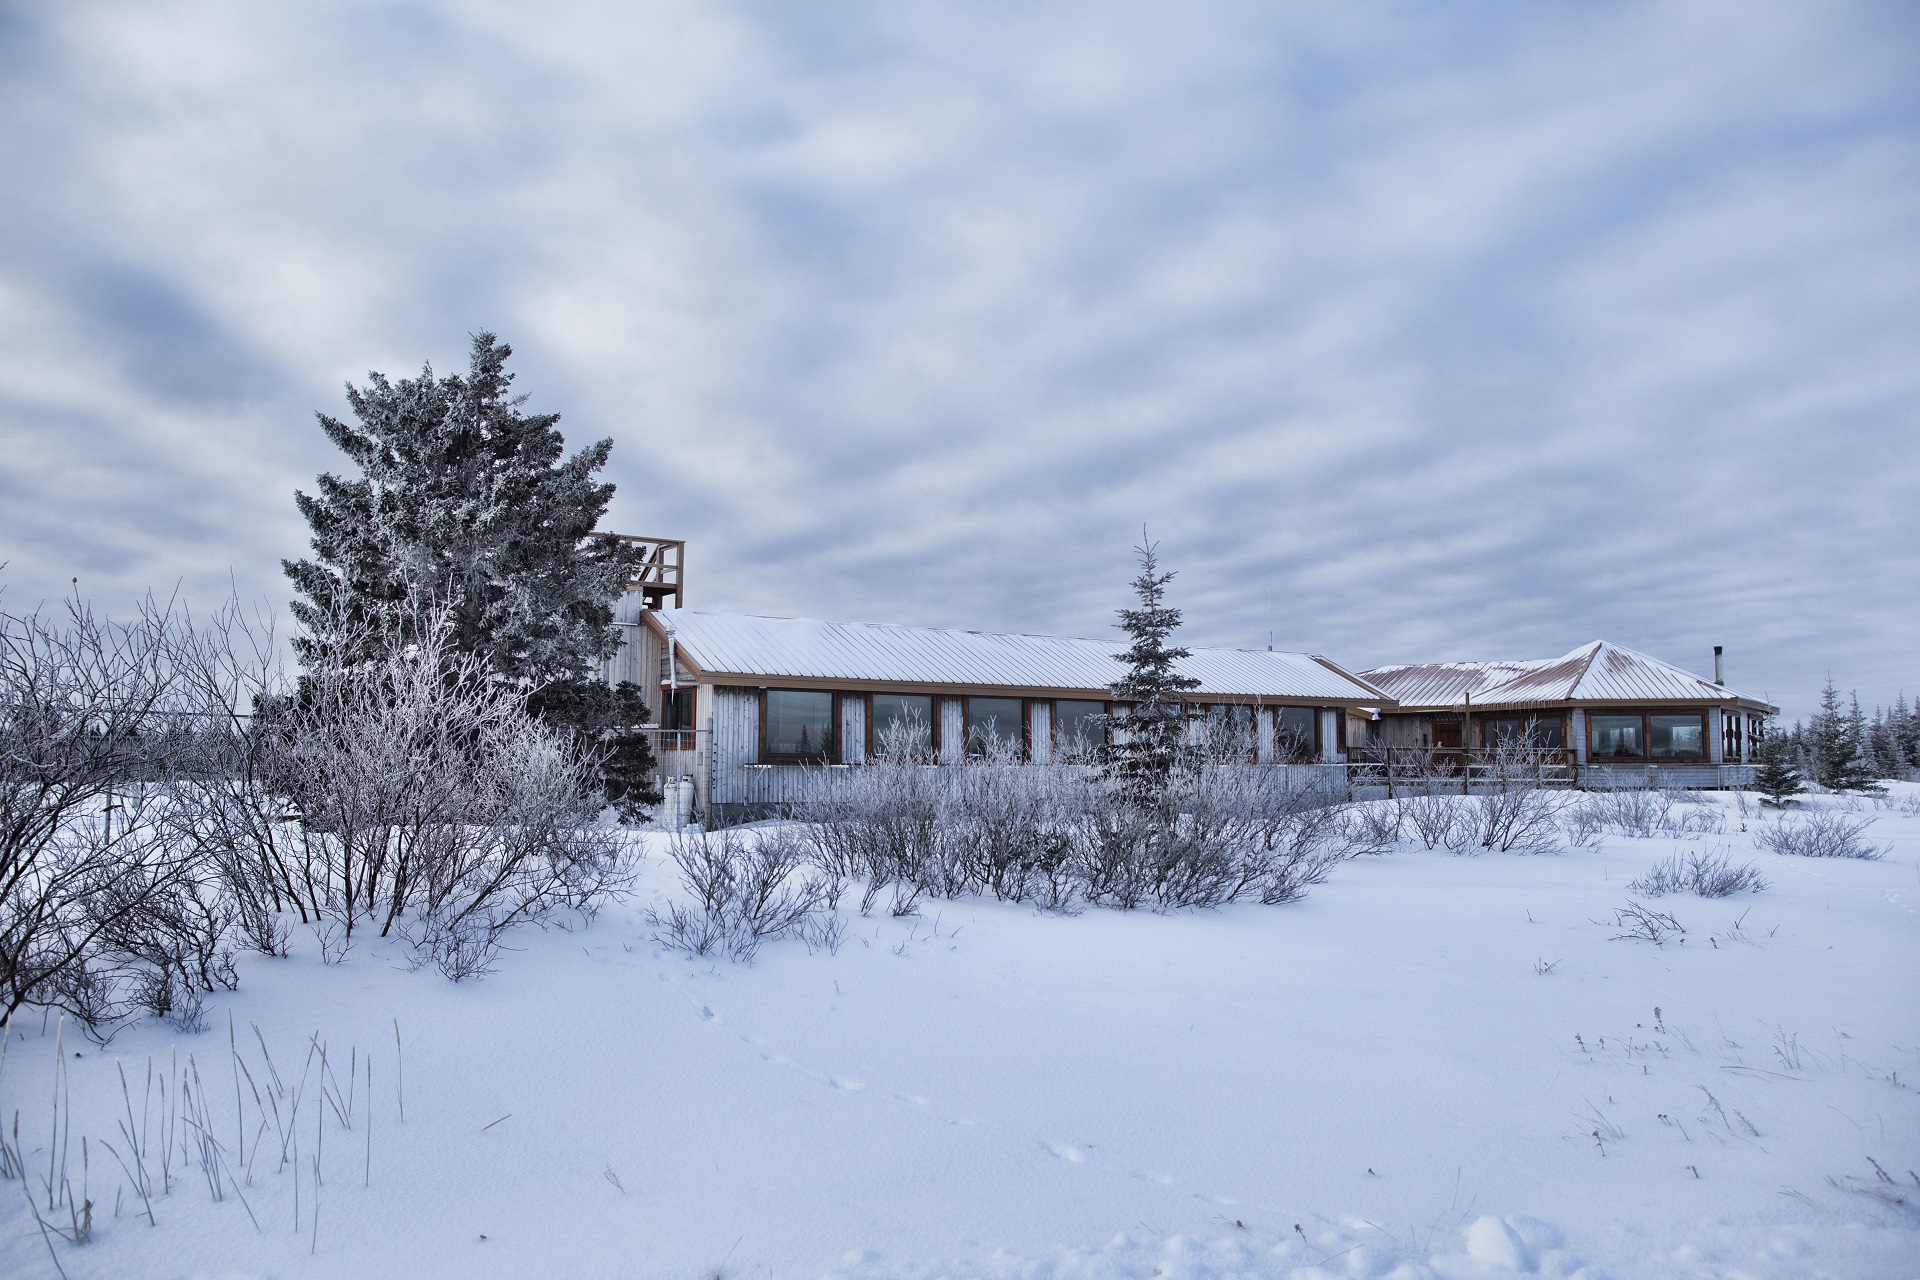 Nanuk Polar Bear Lodge in the winter. Ruth Elwell-Steck photo.